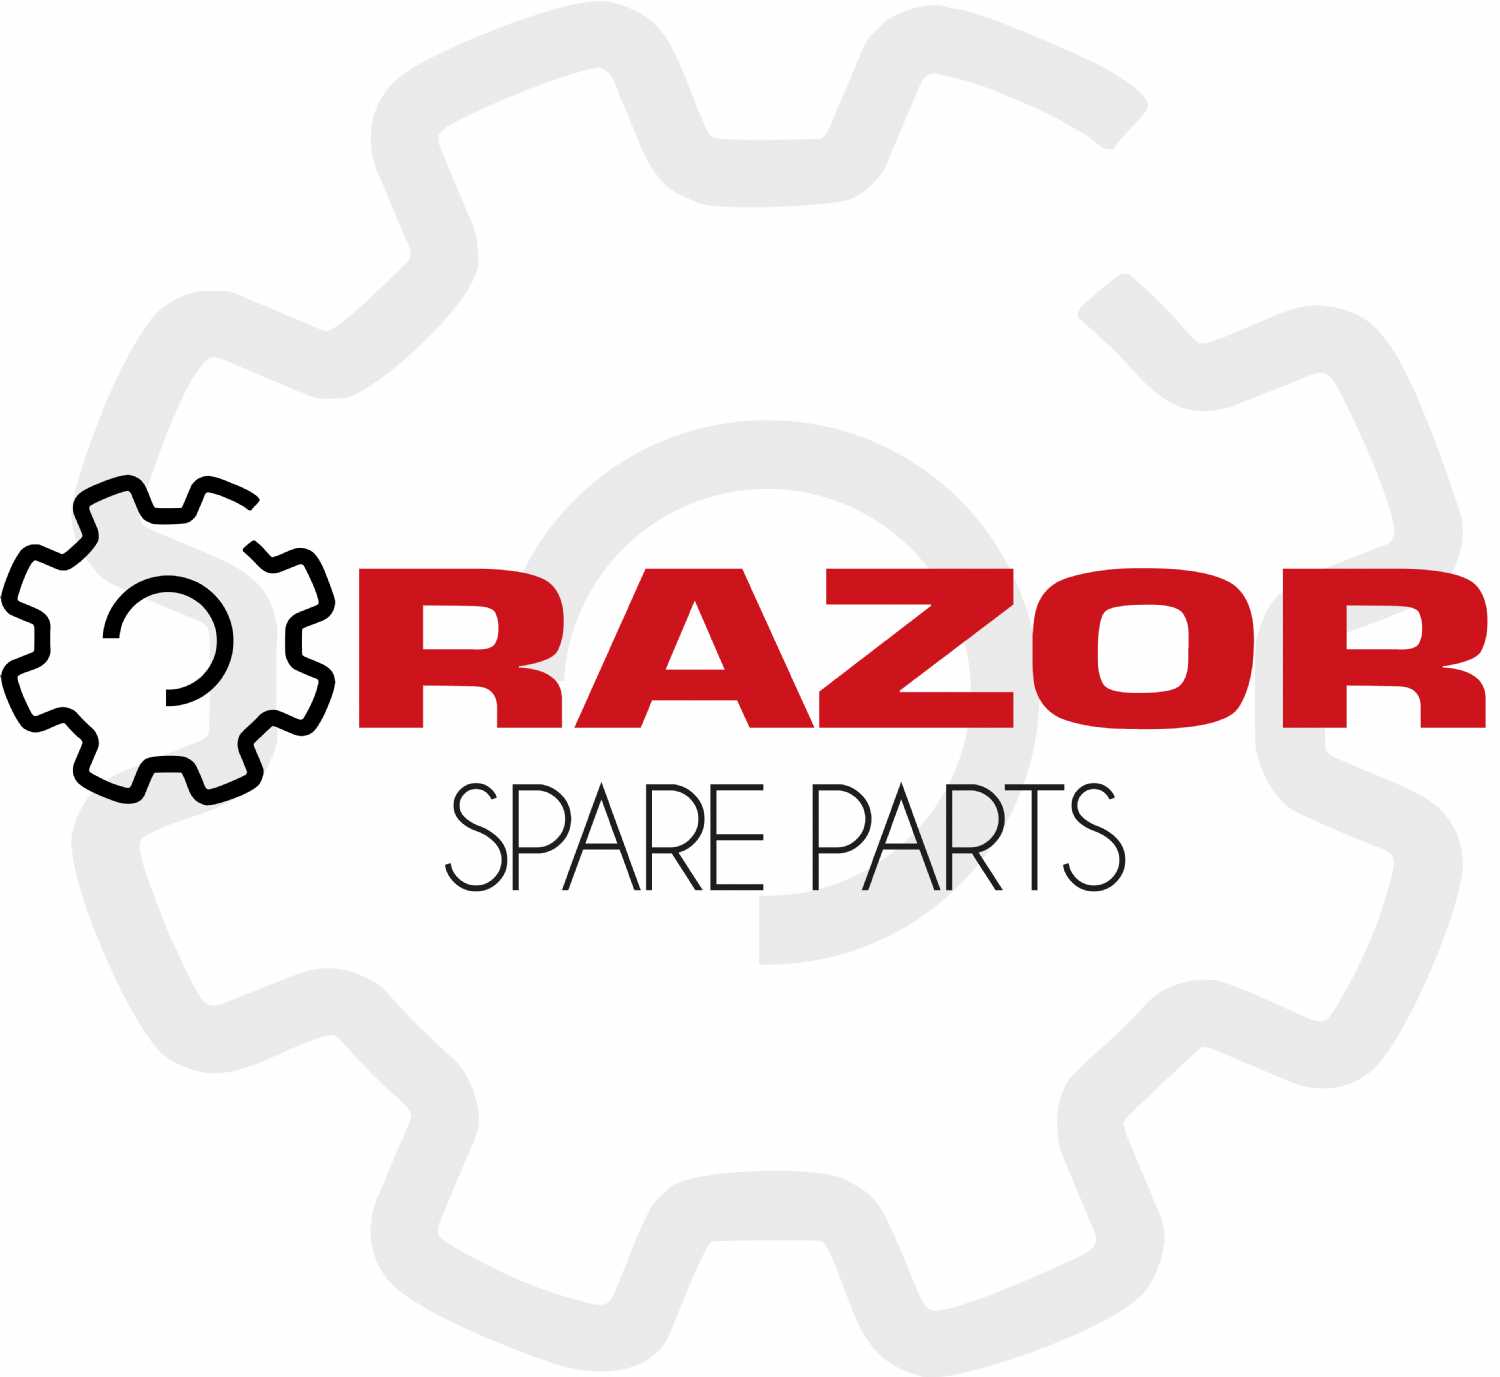 Razor Spare Parts Logo